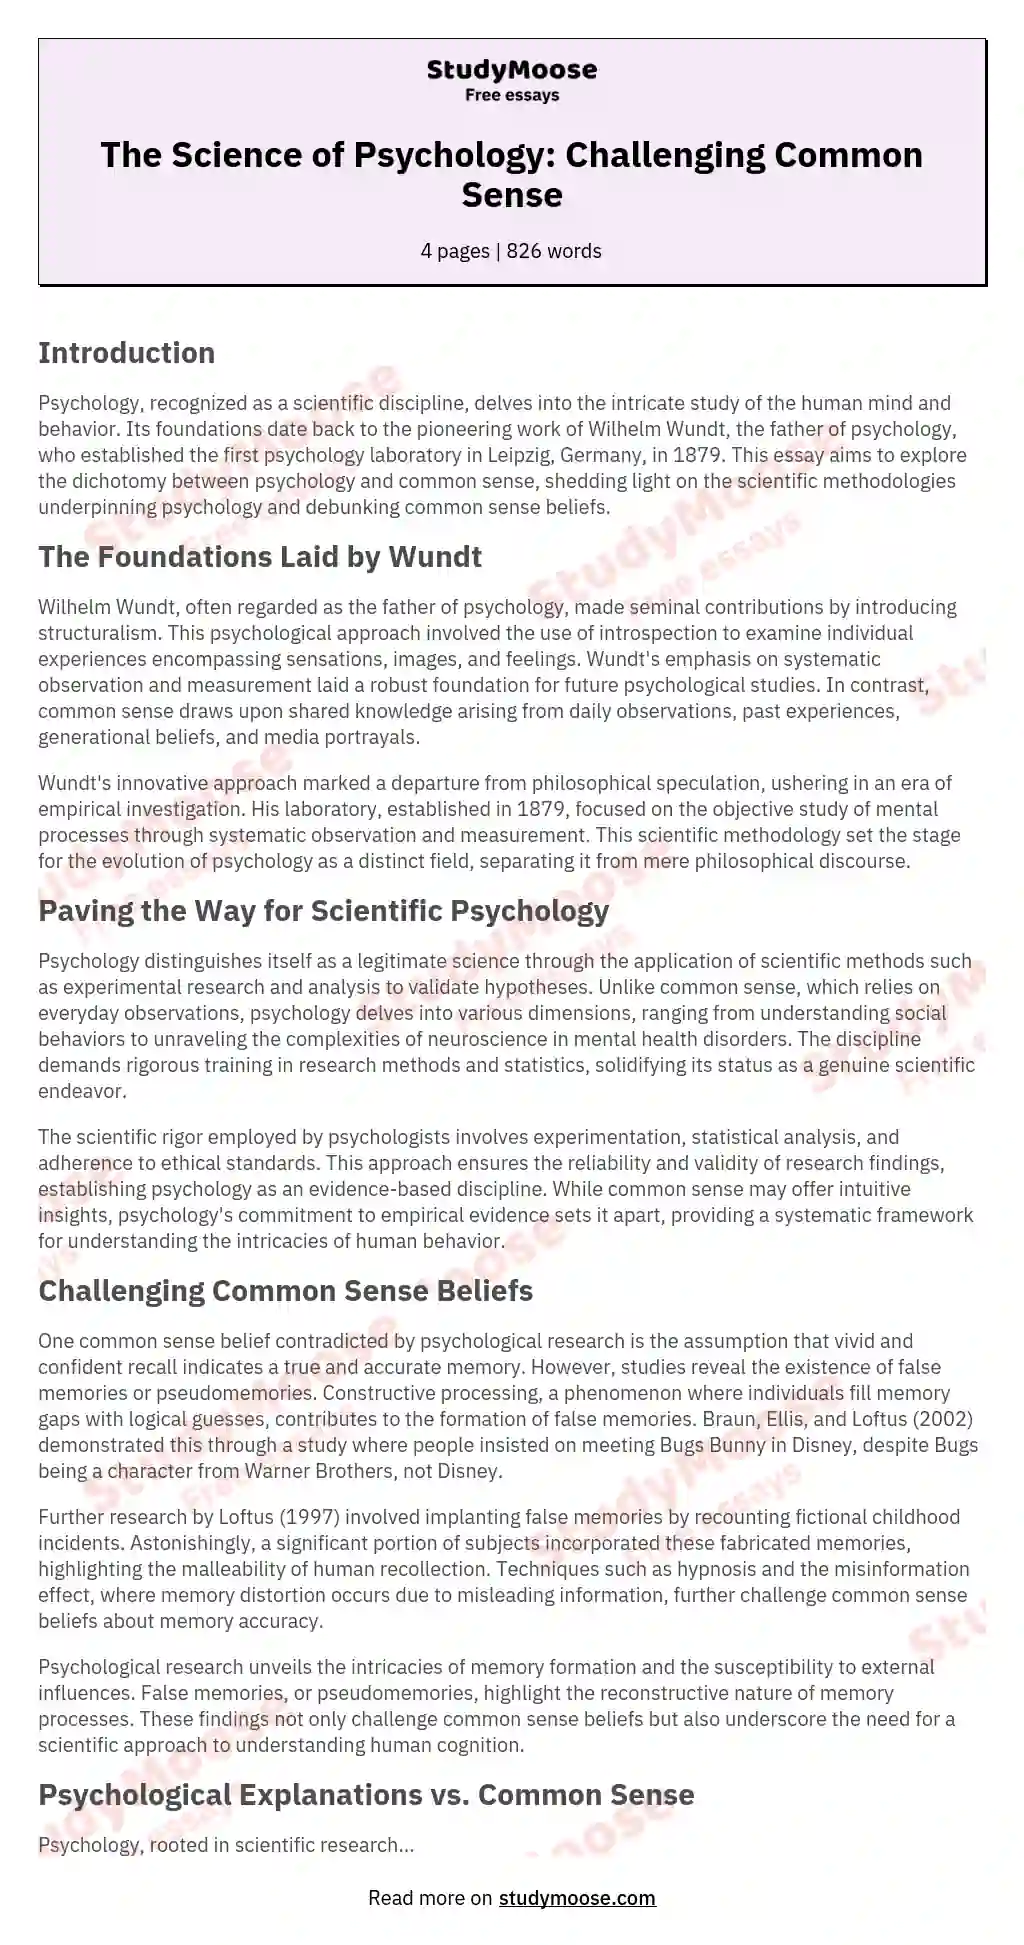 Psychology and common sense